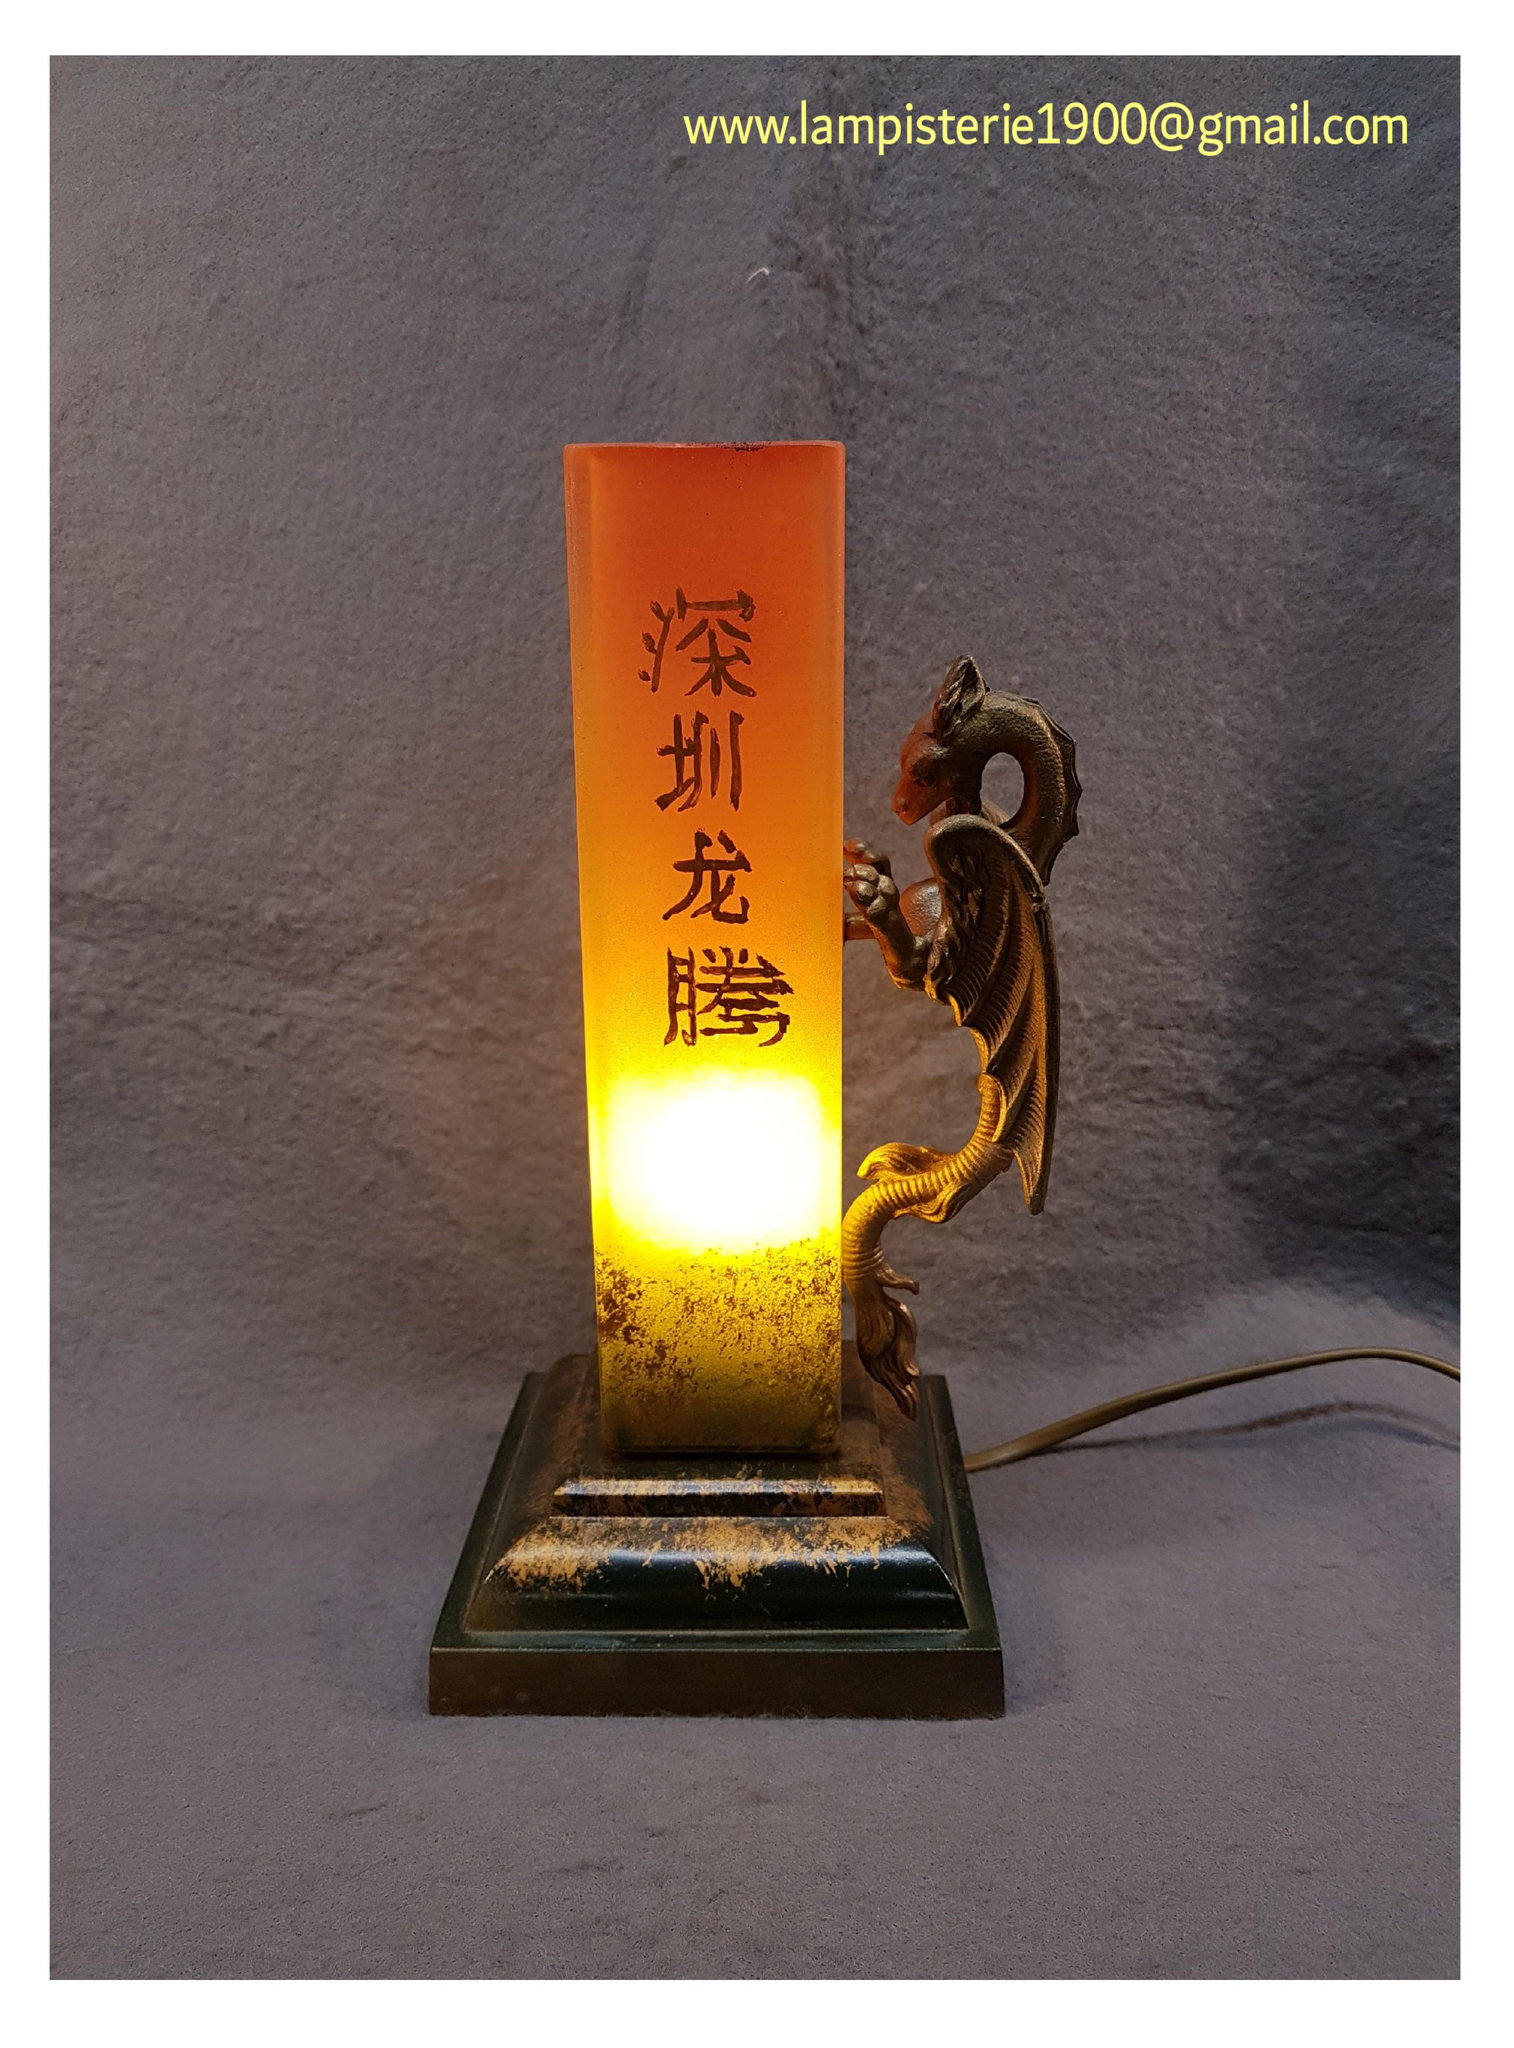 restauration-lampe-art-deco-1930-orientaliste